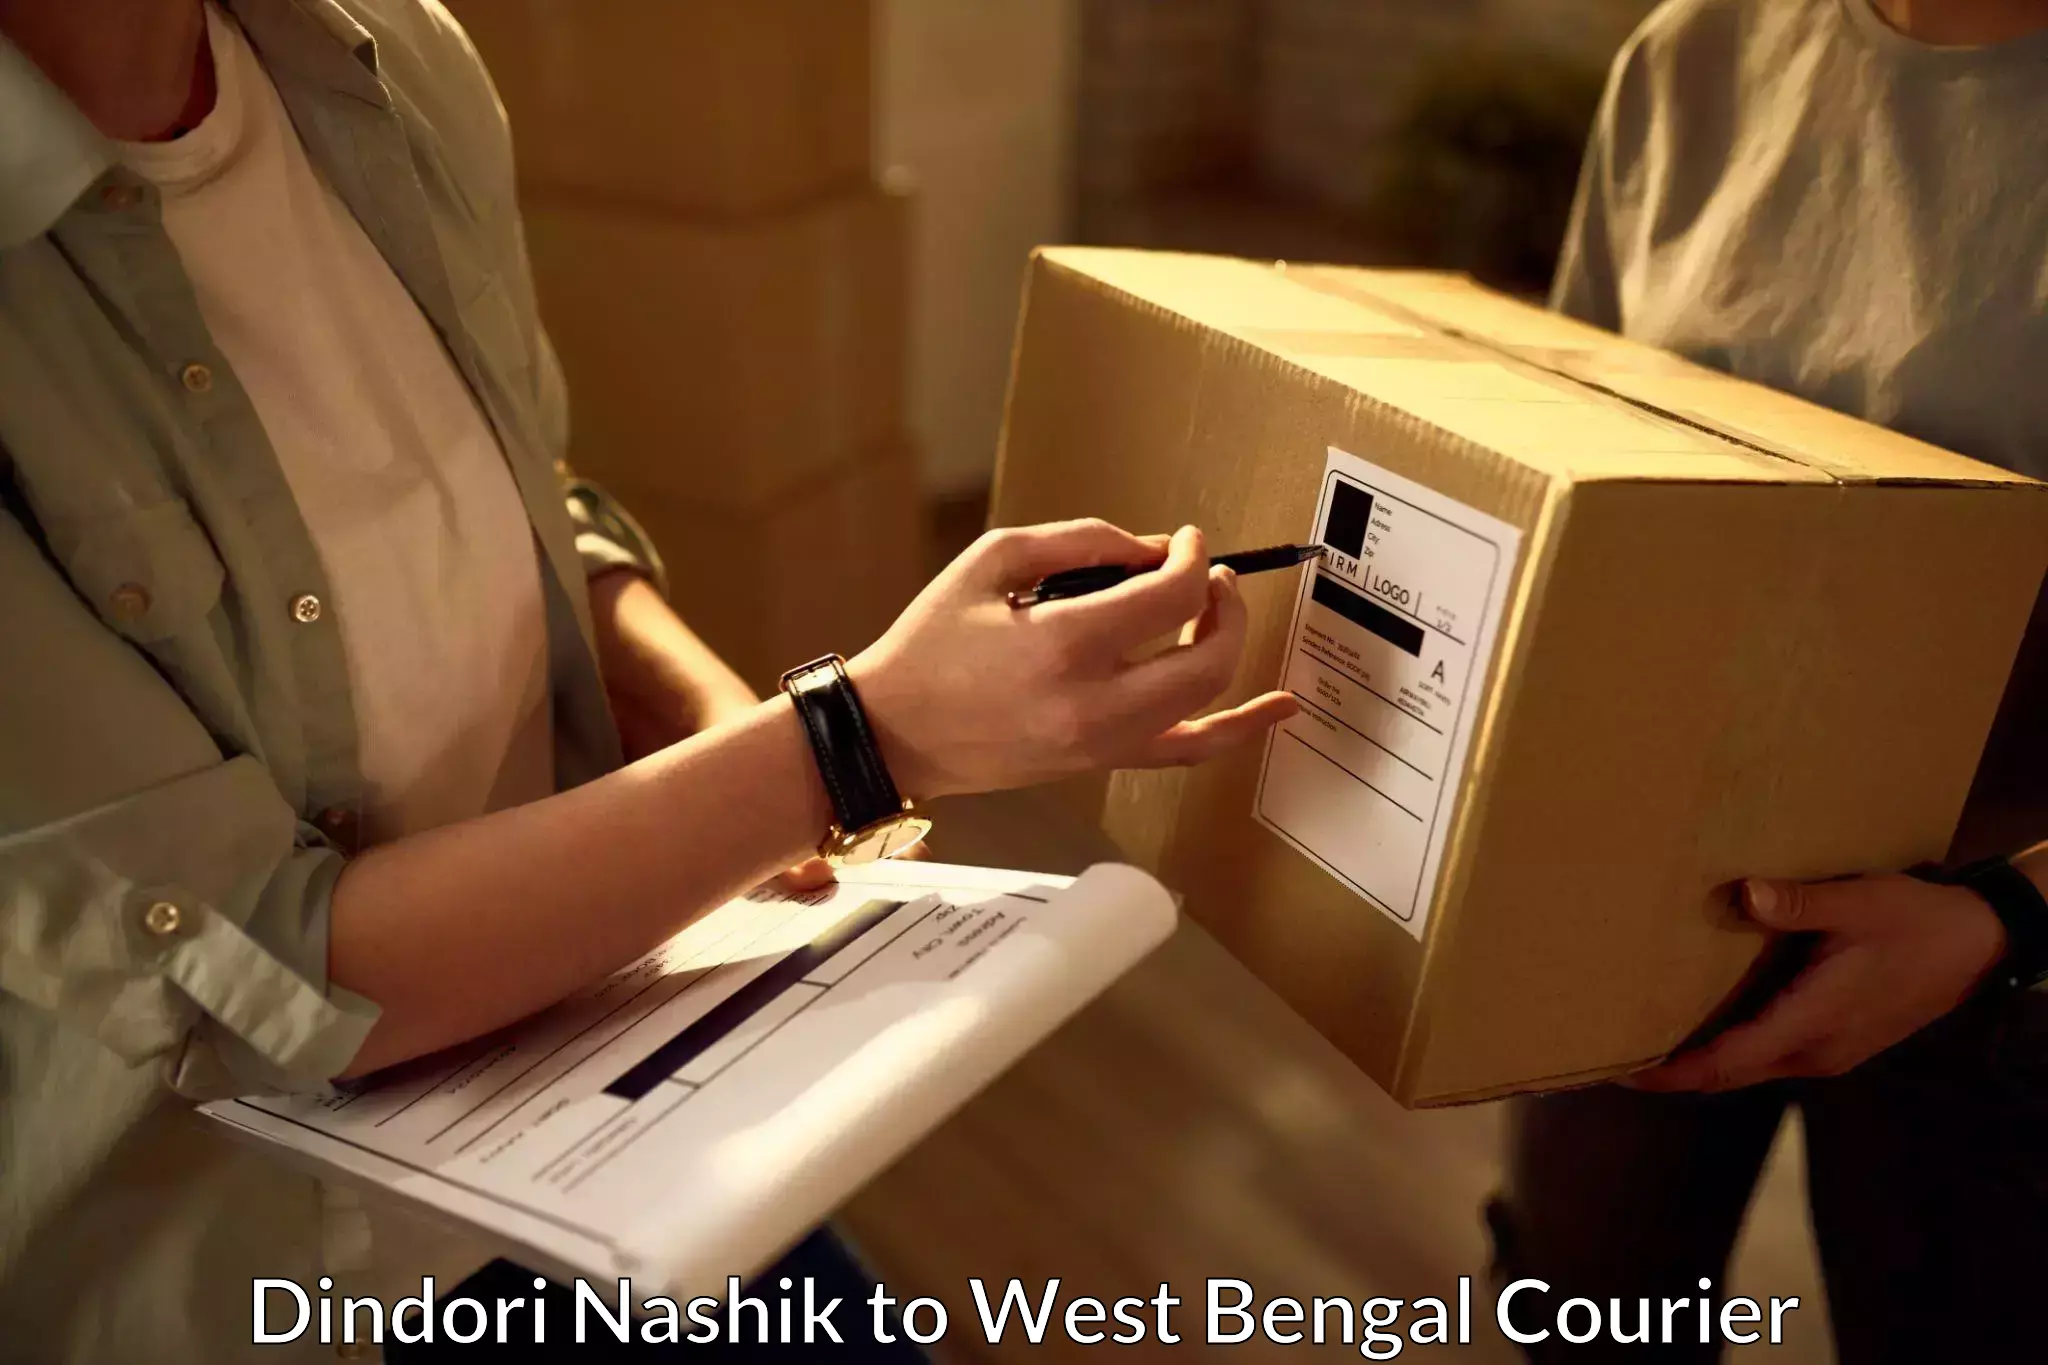 Cash on delivery service Dindori Nashik to Alipurduar